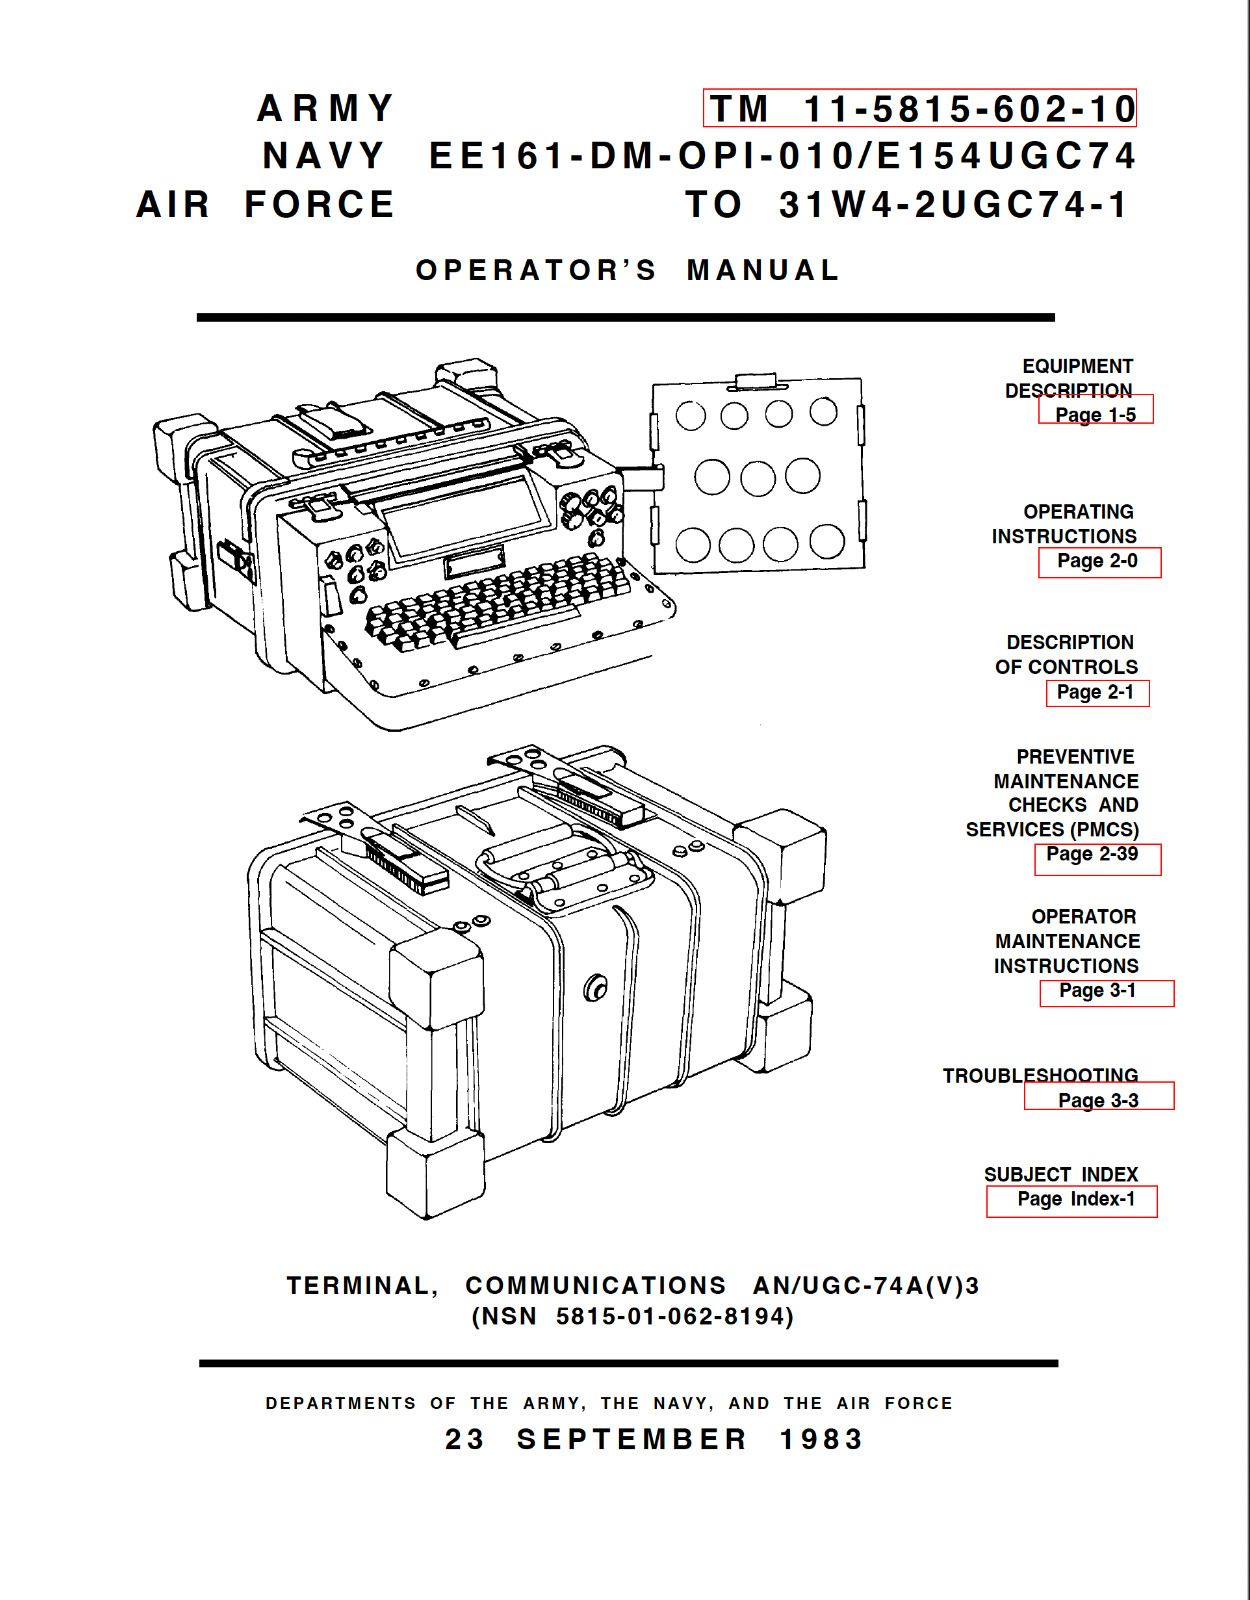 226 Page TM 11-5815-602-10 TERMINAL COMMUNICATIONS AN/UGC-74A(V)3 Manual on CD